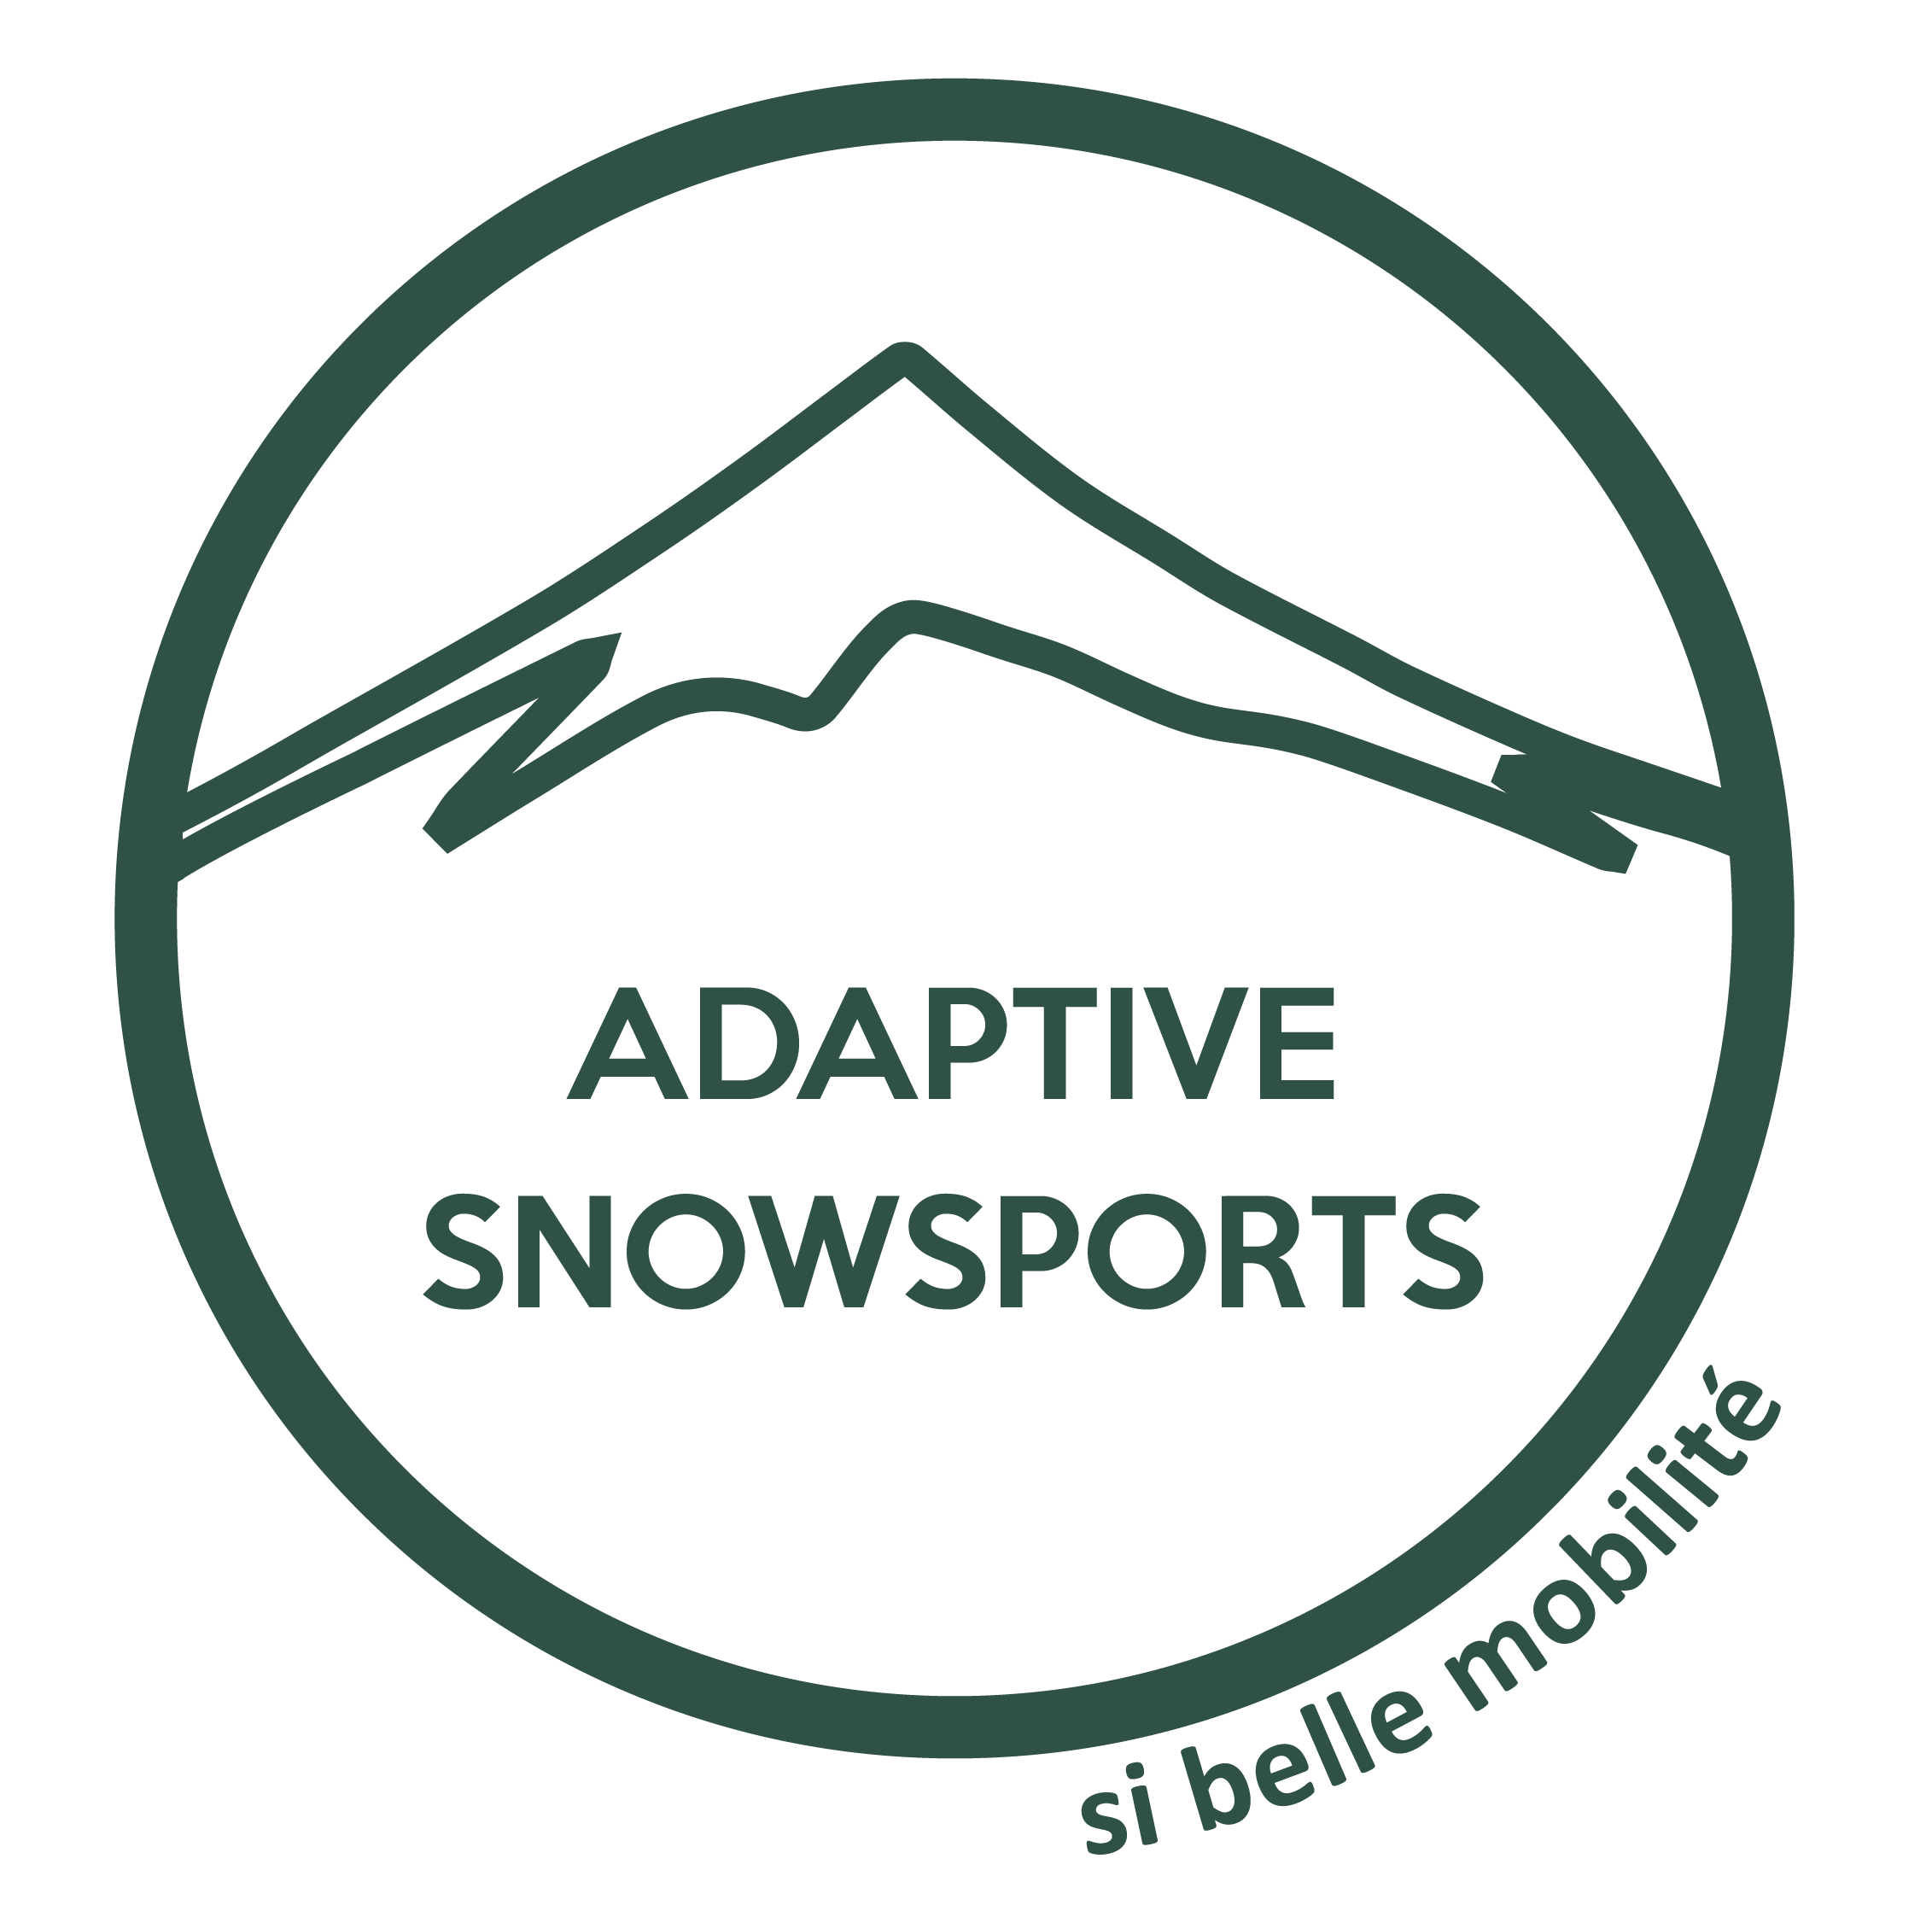 Si belle mobilité Adaptive Snowsports logo groen transparant